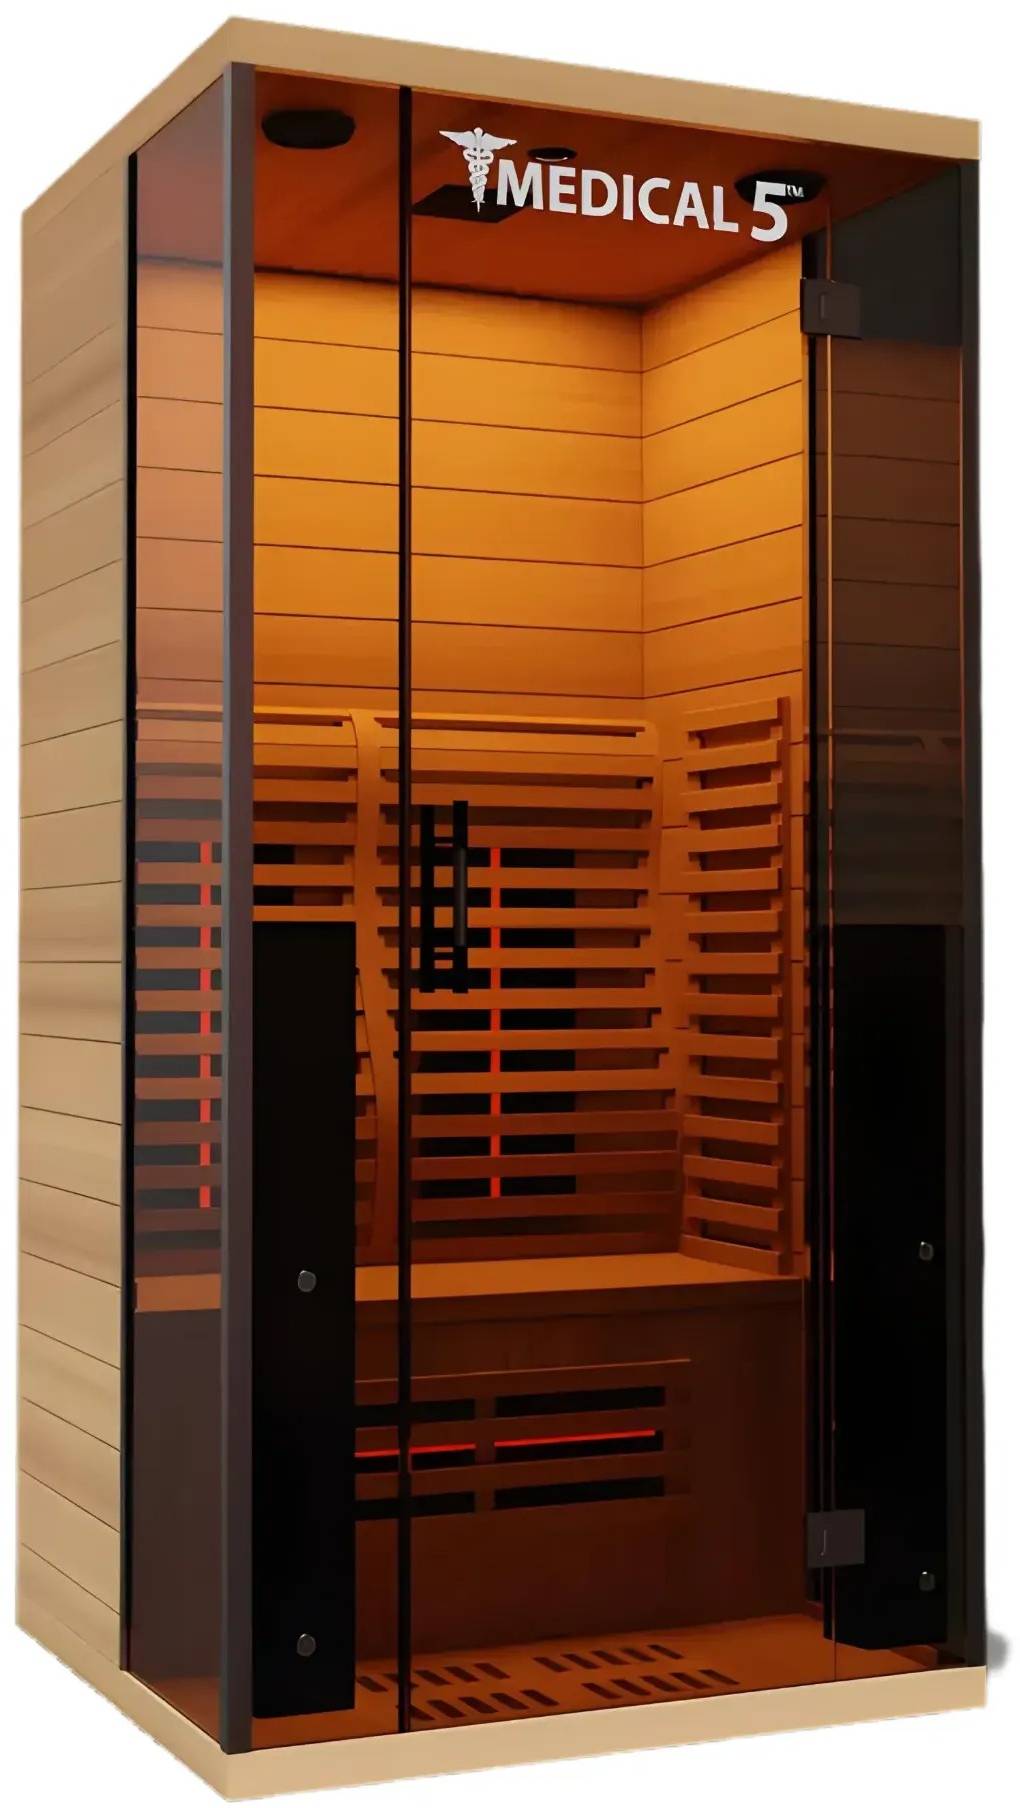 ZiahCare's Medical Saunas 1 Person Ultra Full Spectrum Infrared Sauna Model 5 Mockup Image 2